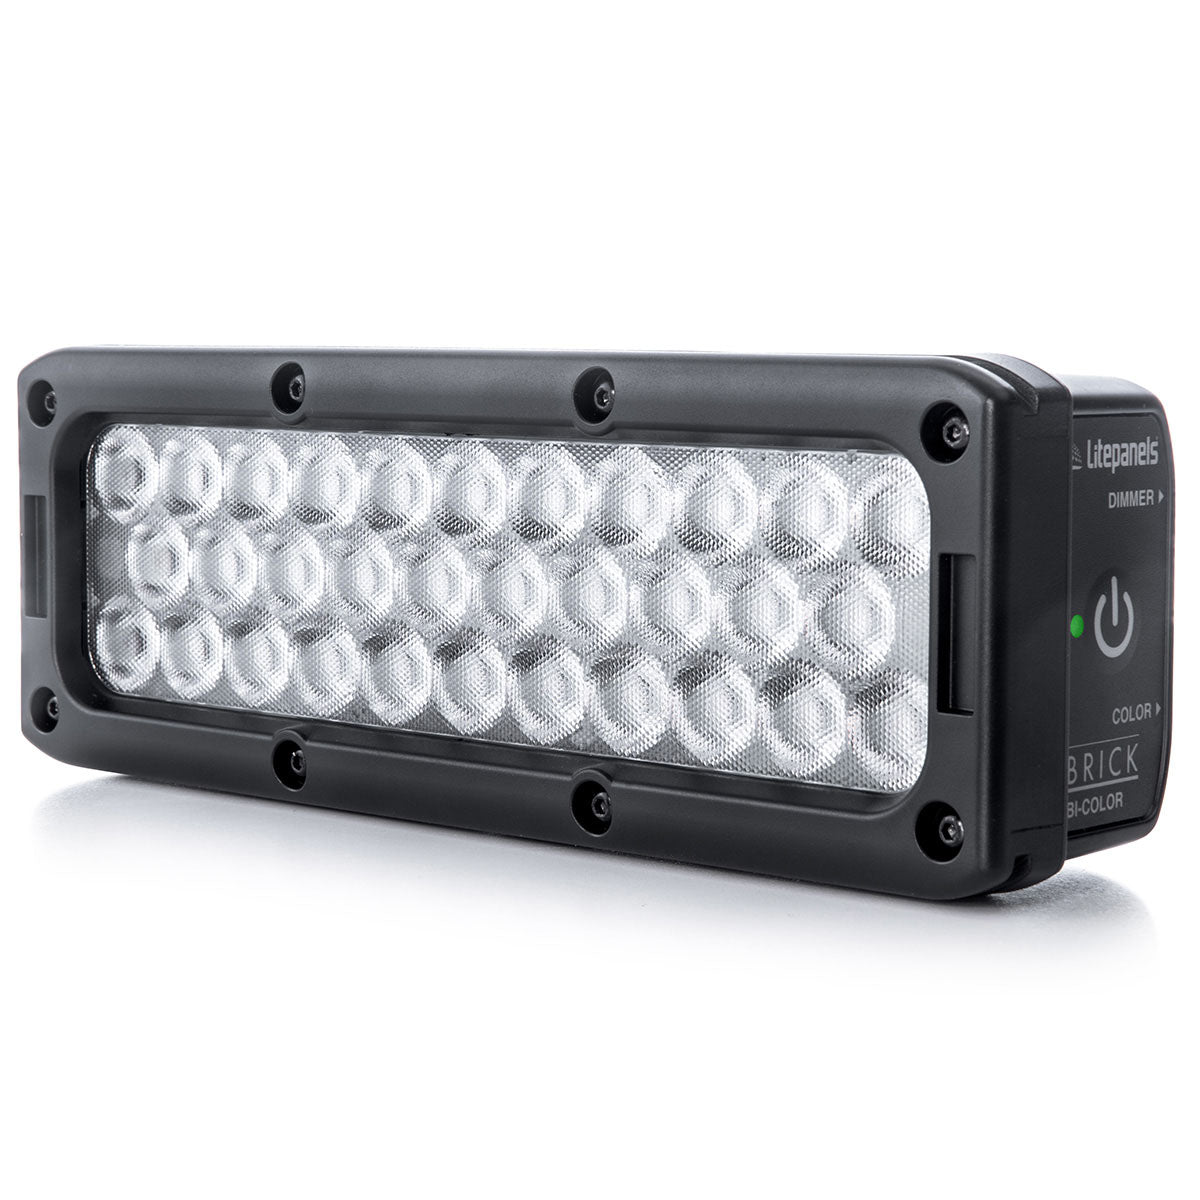 Litepanels(ライトパネルズ) LEDライト Brick バイカラー (915-1003)